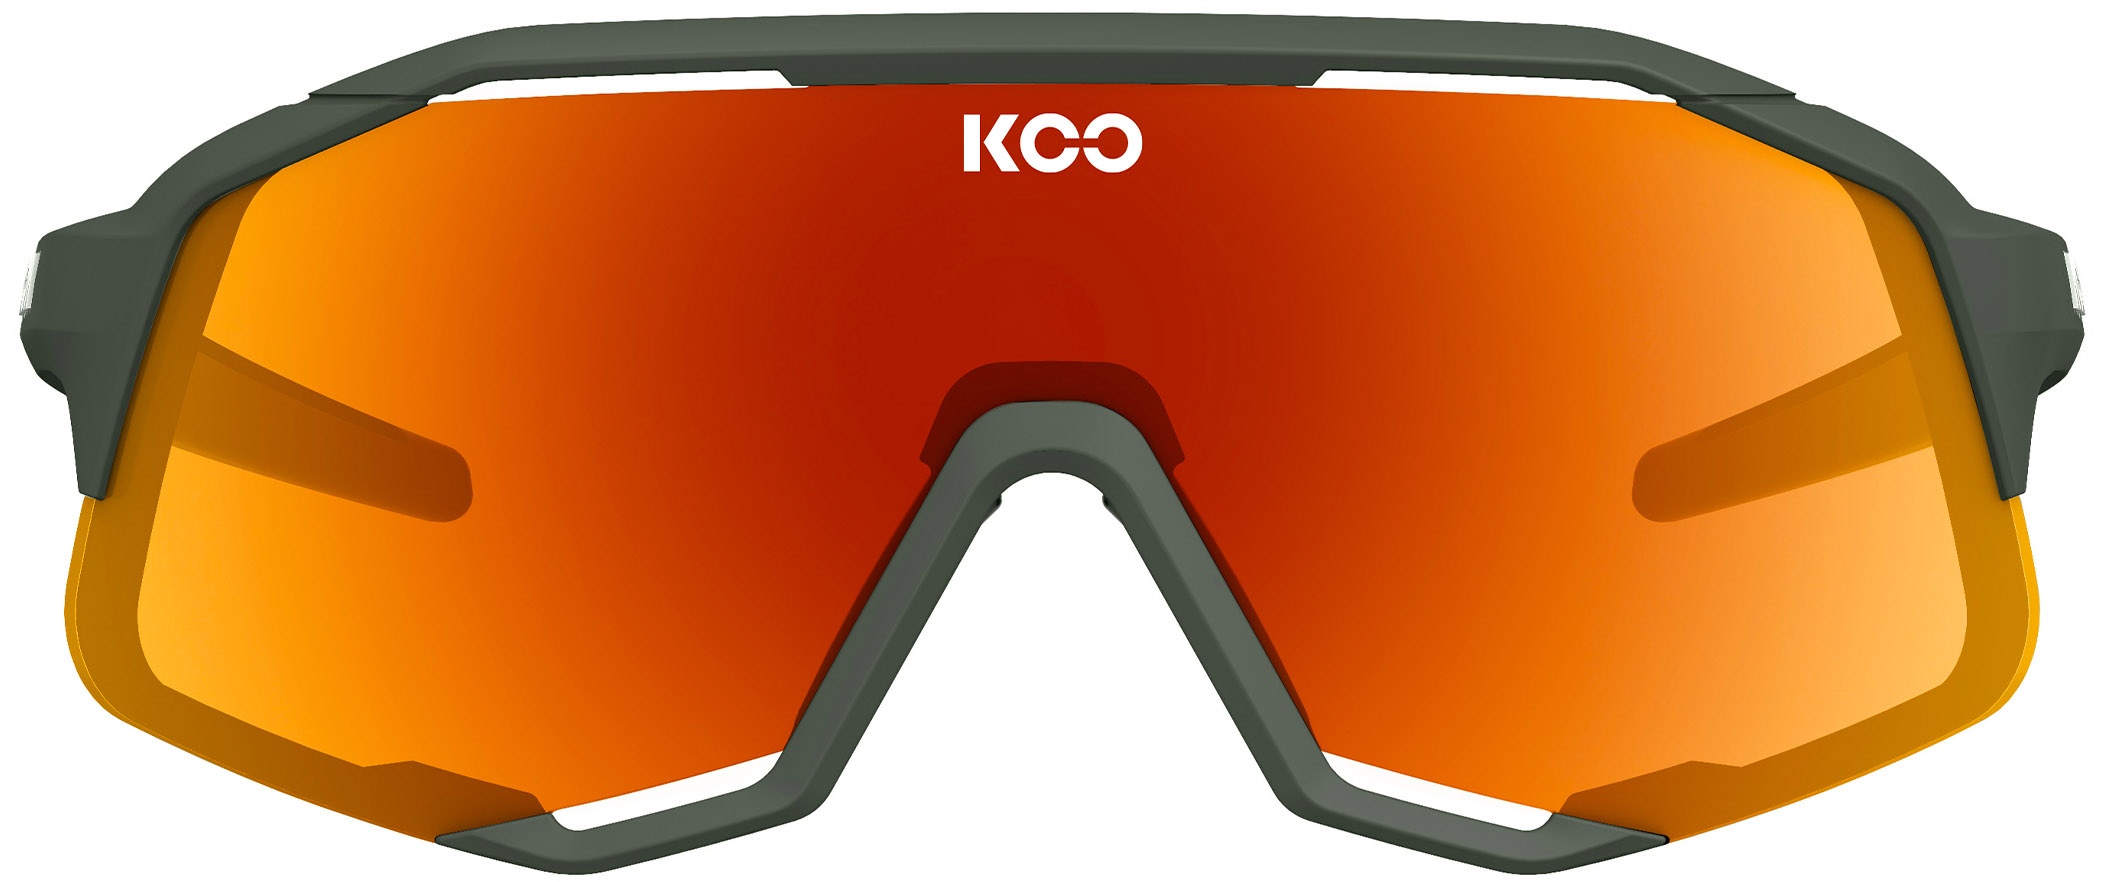 Beklædning - Cykelbriller - KOO Demos Cykelbriller - Grøn/Orange